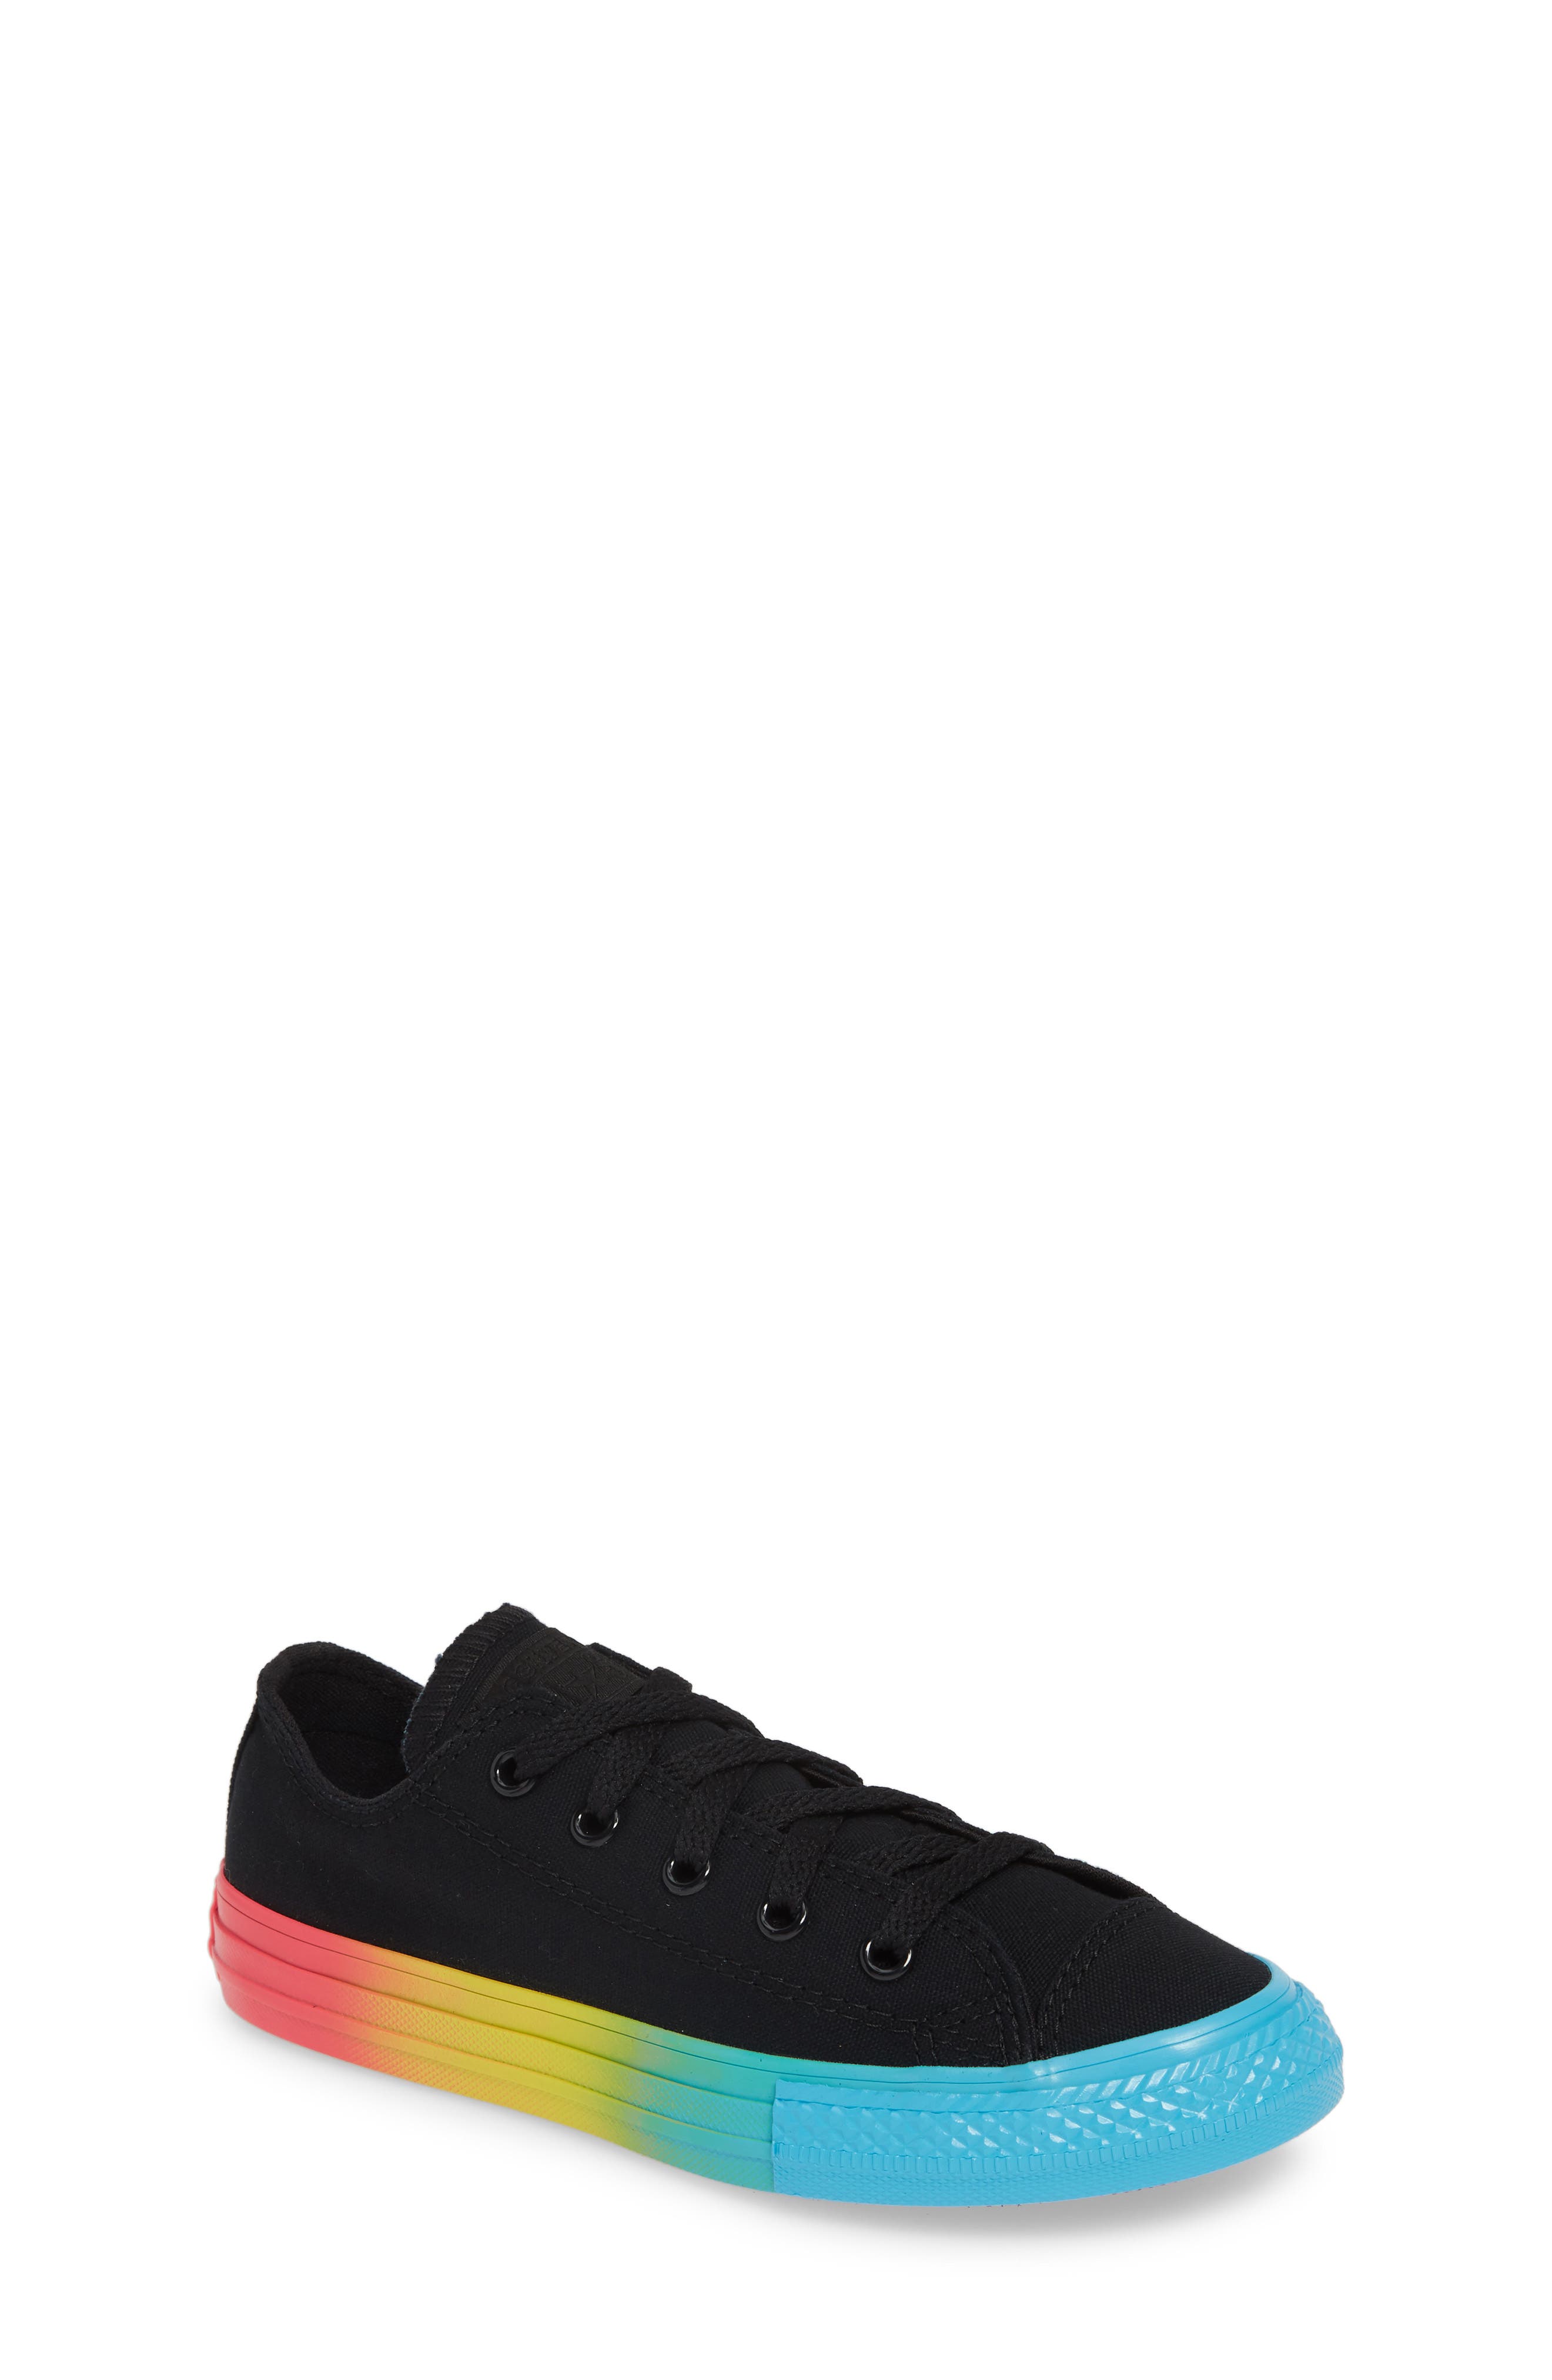 Converse | Ox Rainbow Sole Sneaker 